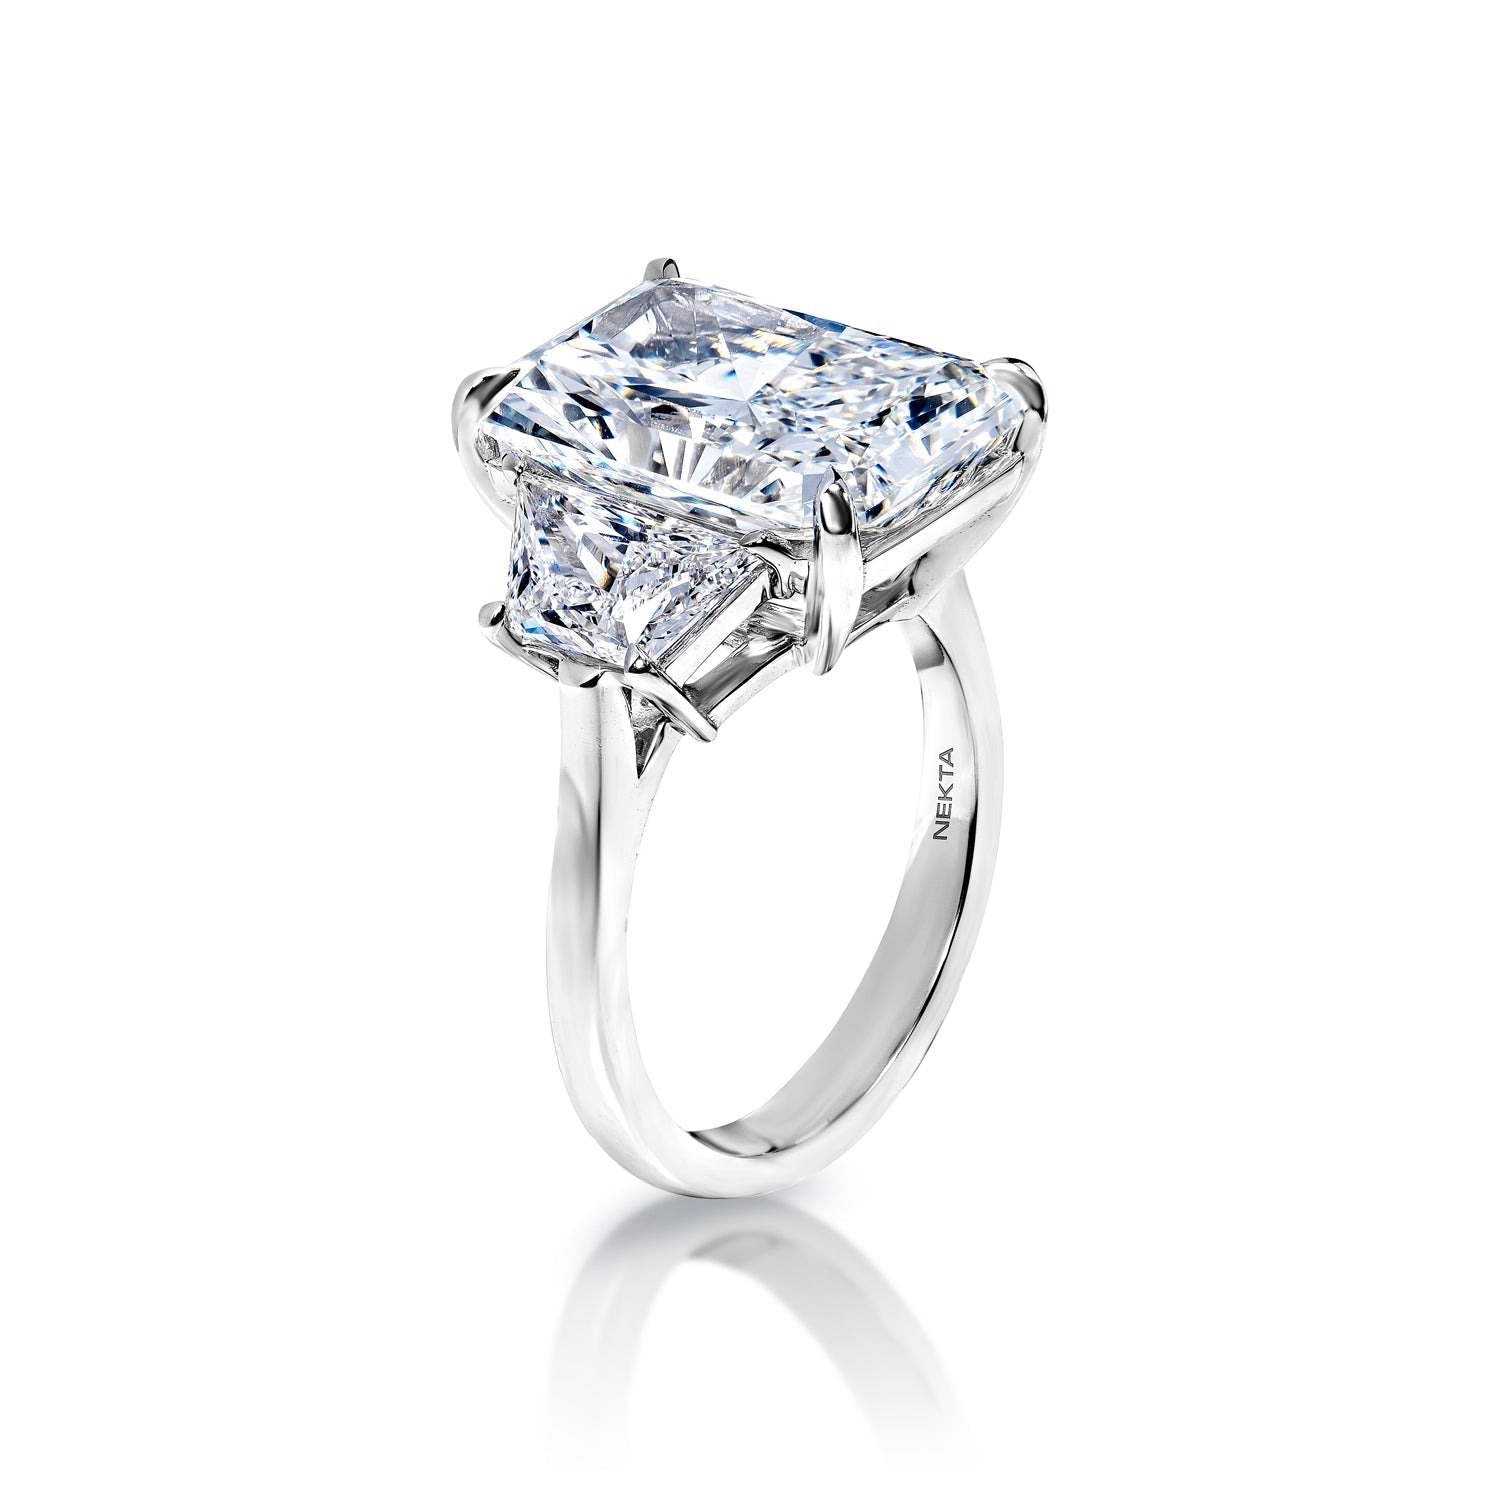 Leoda 10 Carat G VS1 Radiant Cut Diamond Engagement Ring in Platinum. IGI Certified Side View